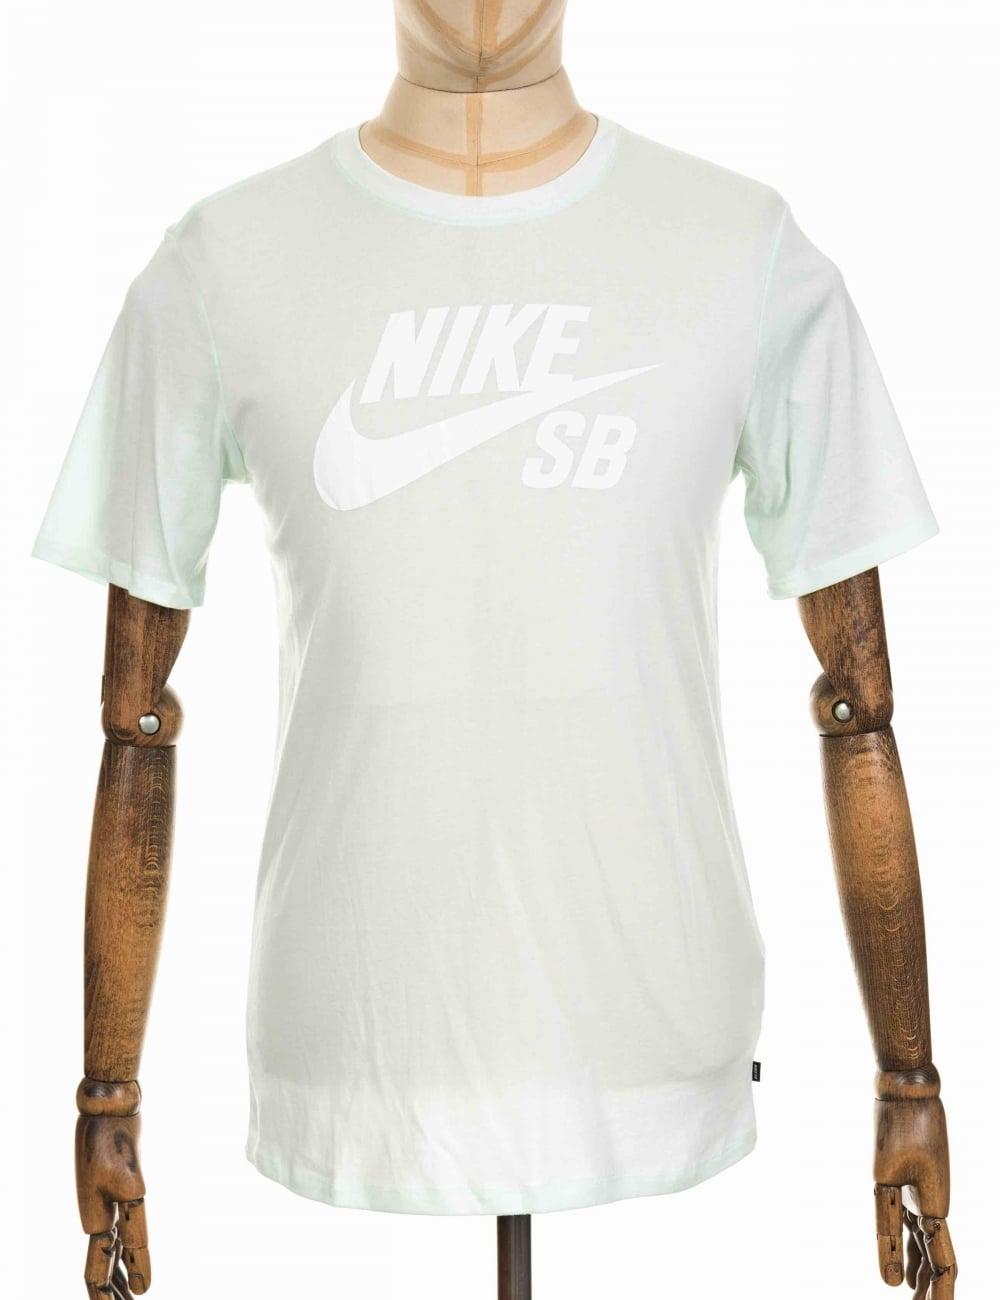 Nike SB Clothing Logo - Nike SB Icon Logo T-shirt - Barley Green/White - Clothing from Fat ...